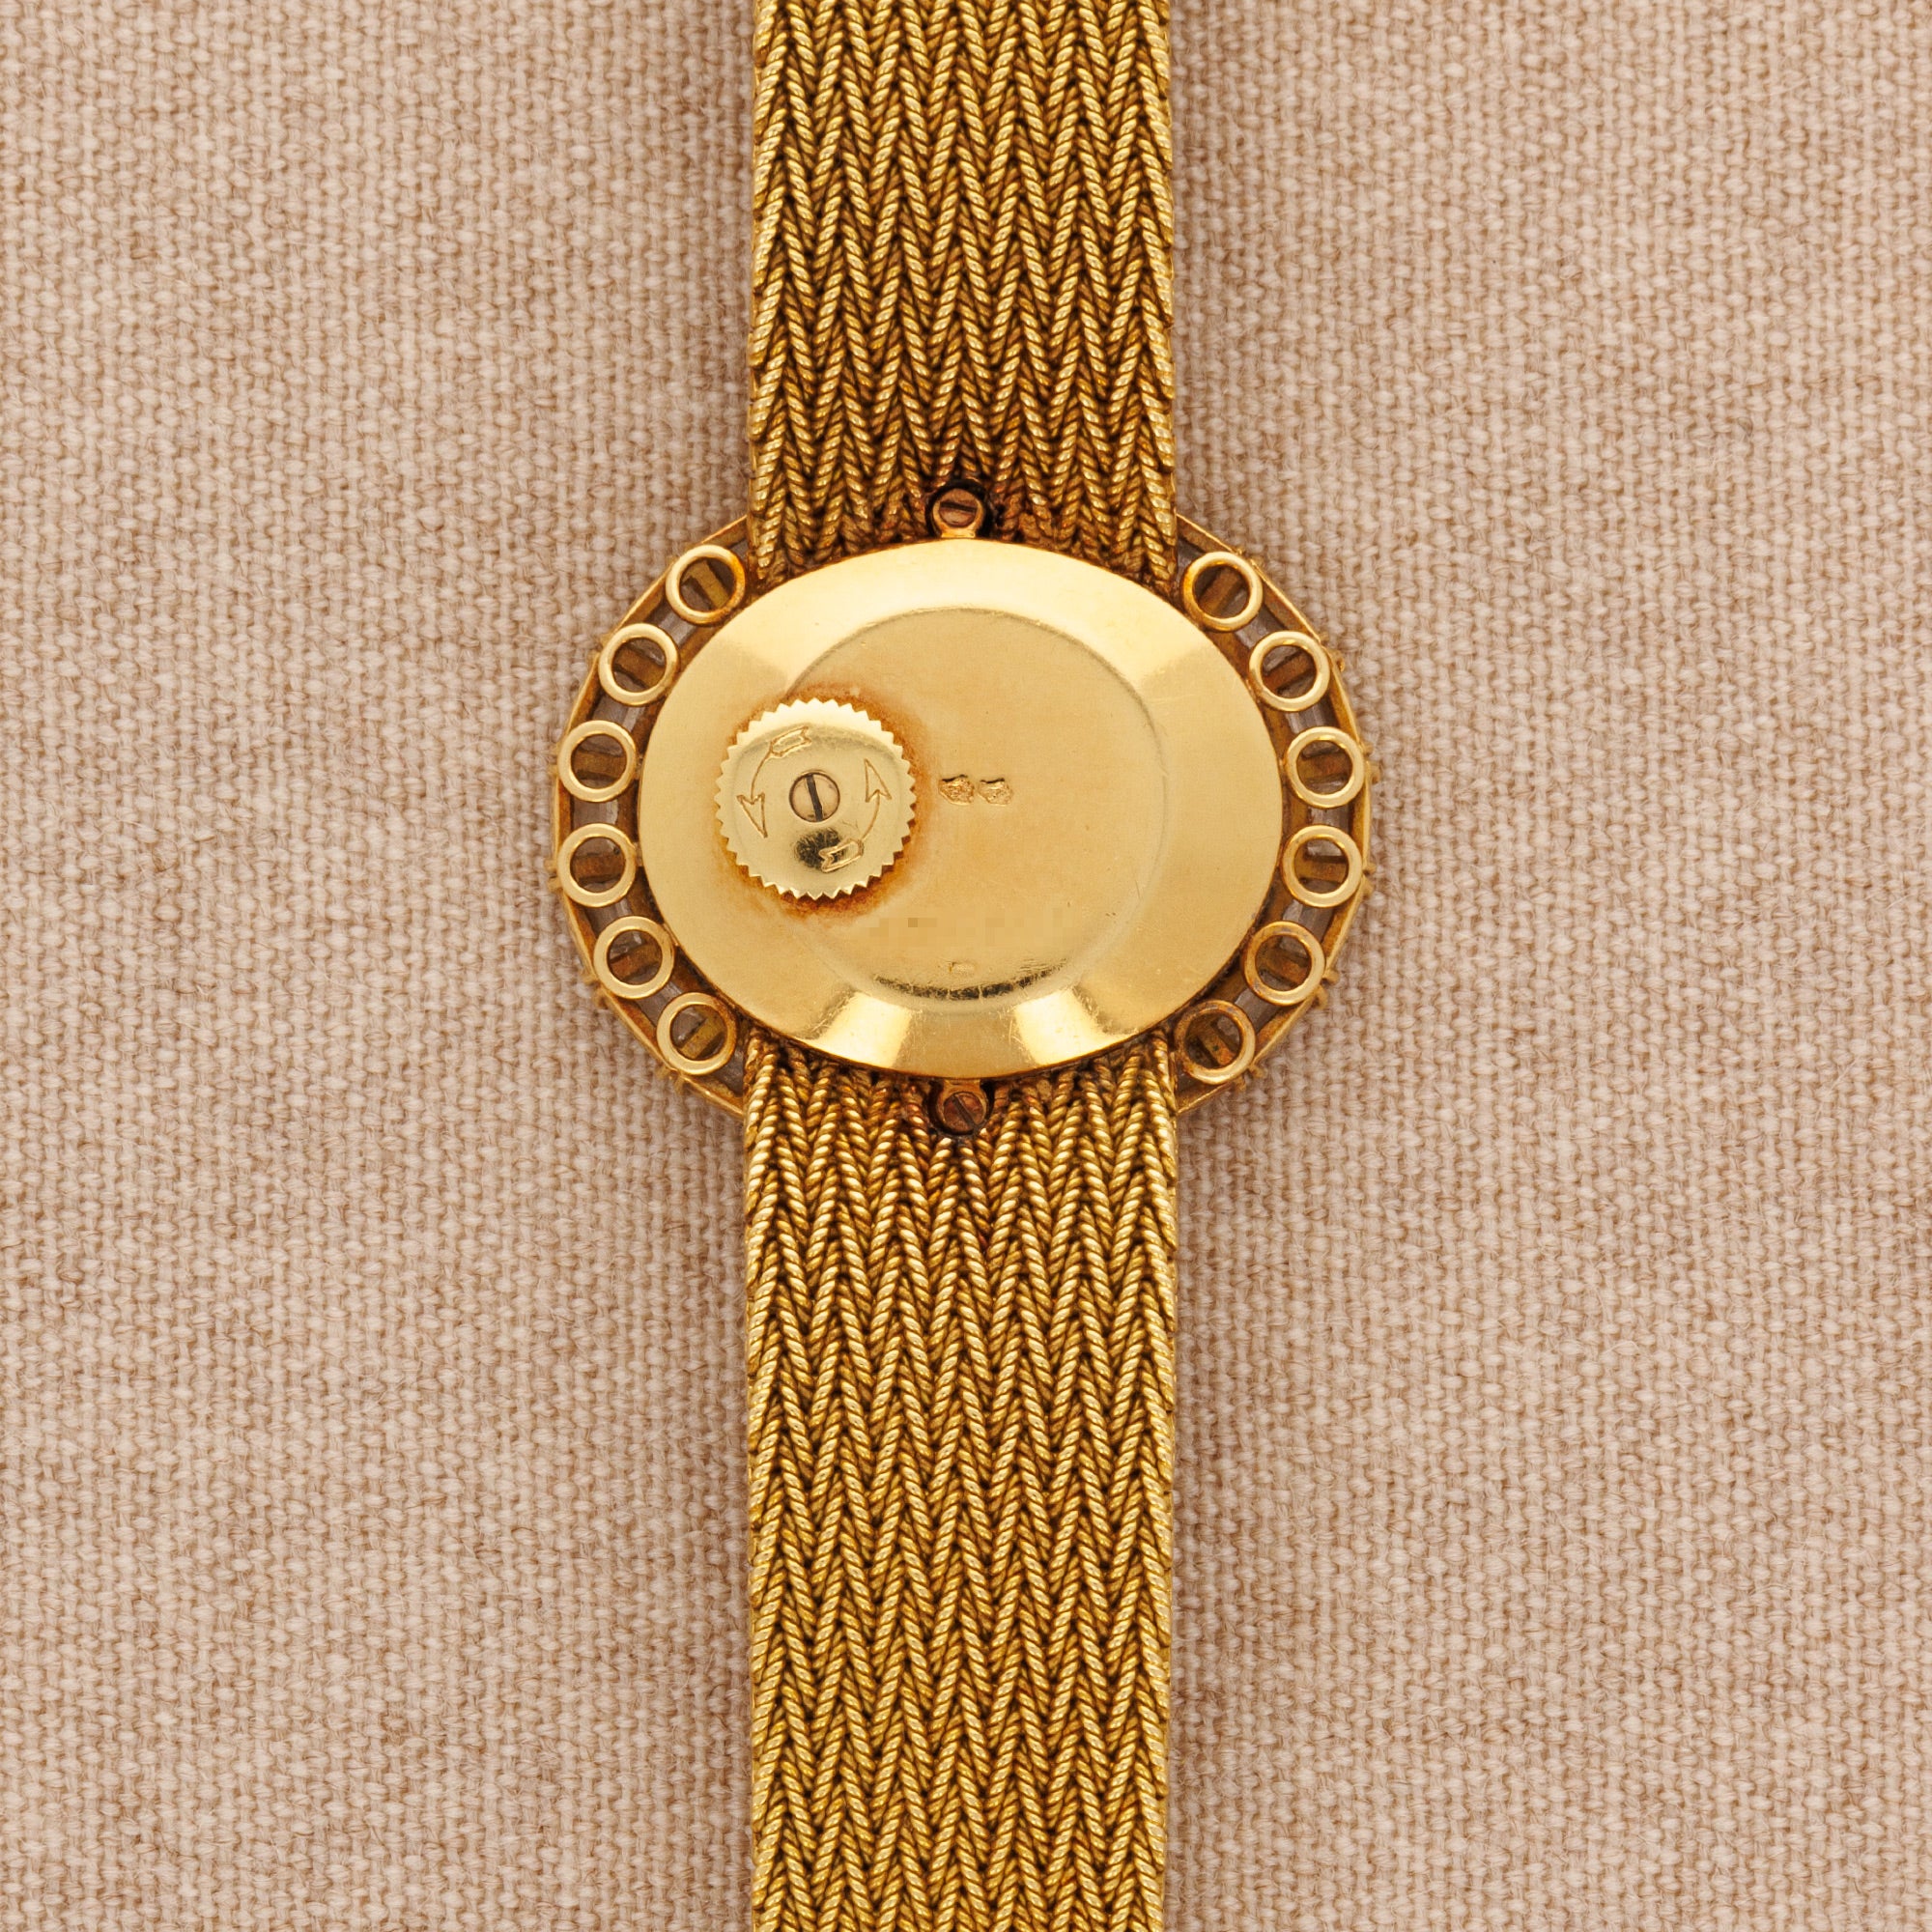 Vacheron Constantin Yellow Gold Watch with Baguette Diamonds